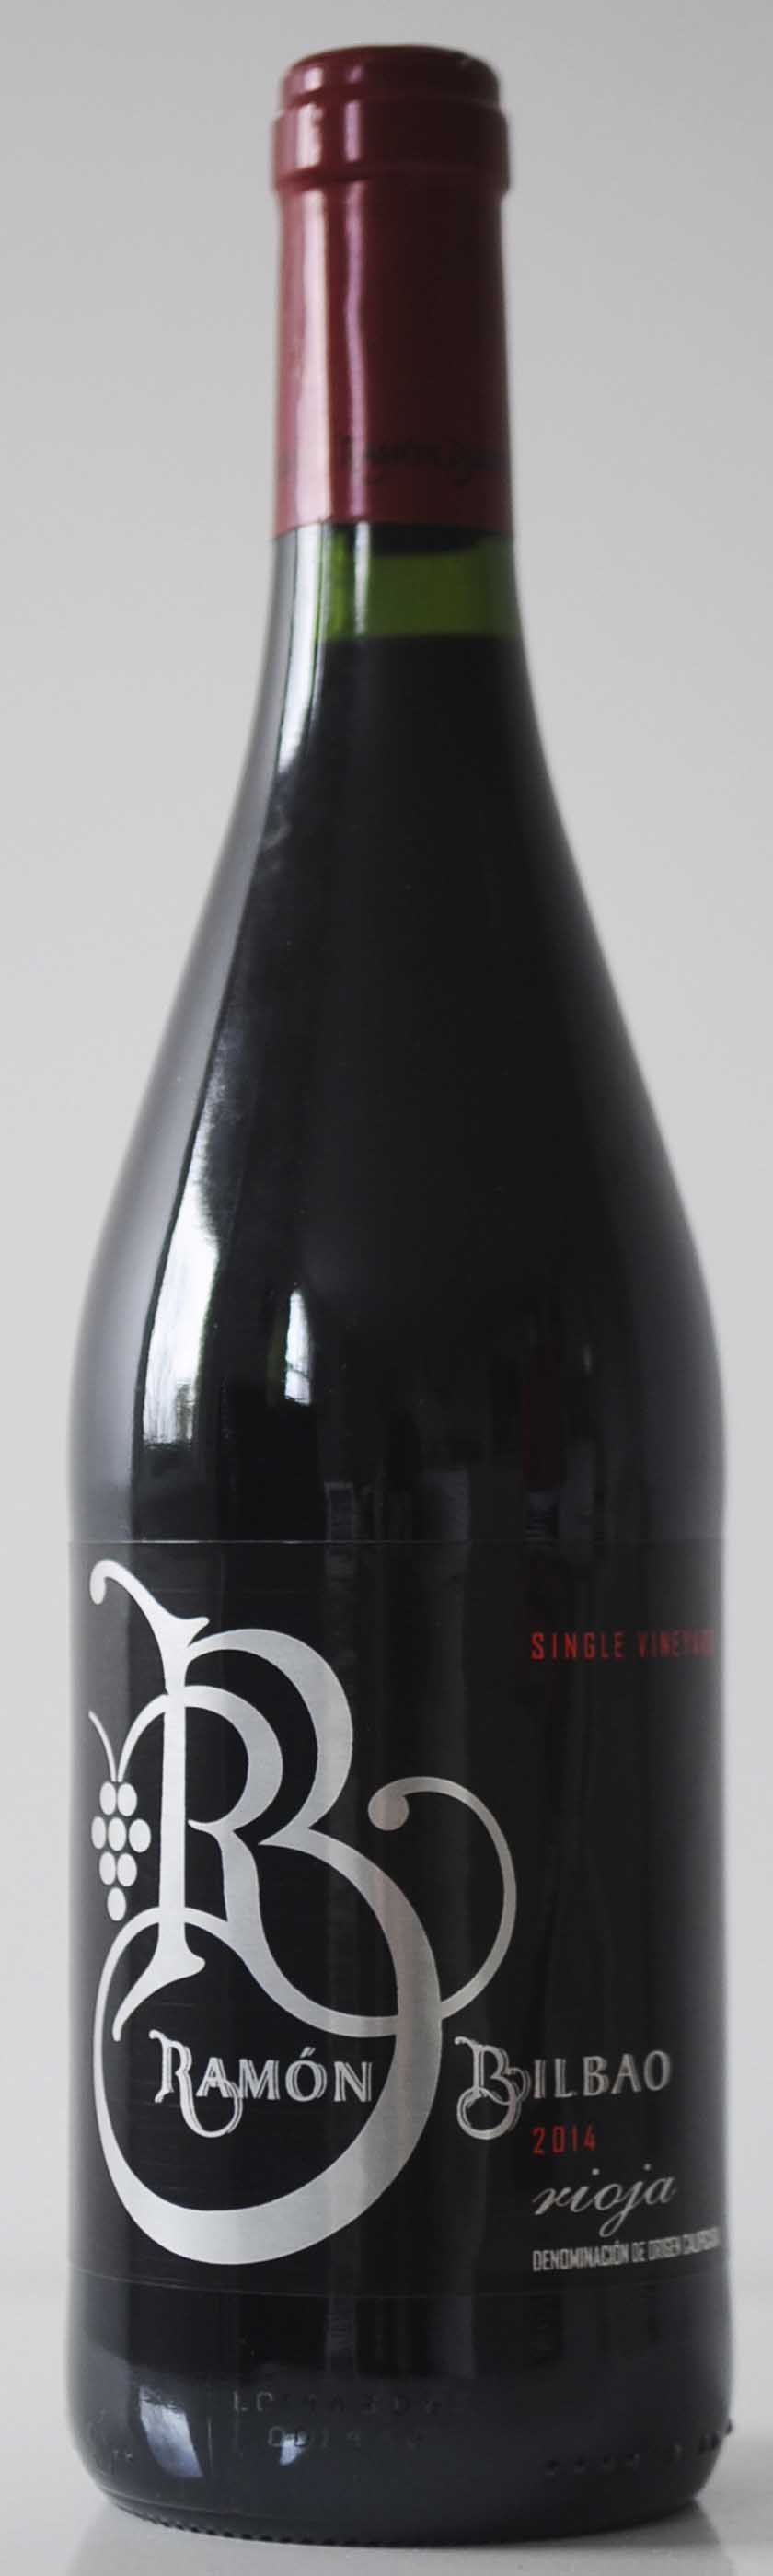 Ramon Bilbao Single Vineyard Rioja 2014, £9.49